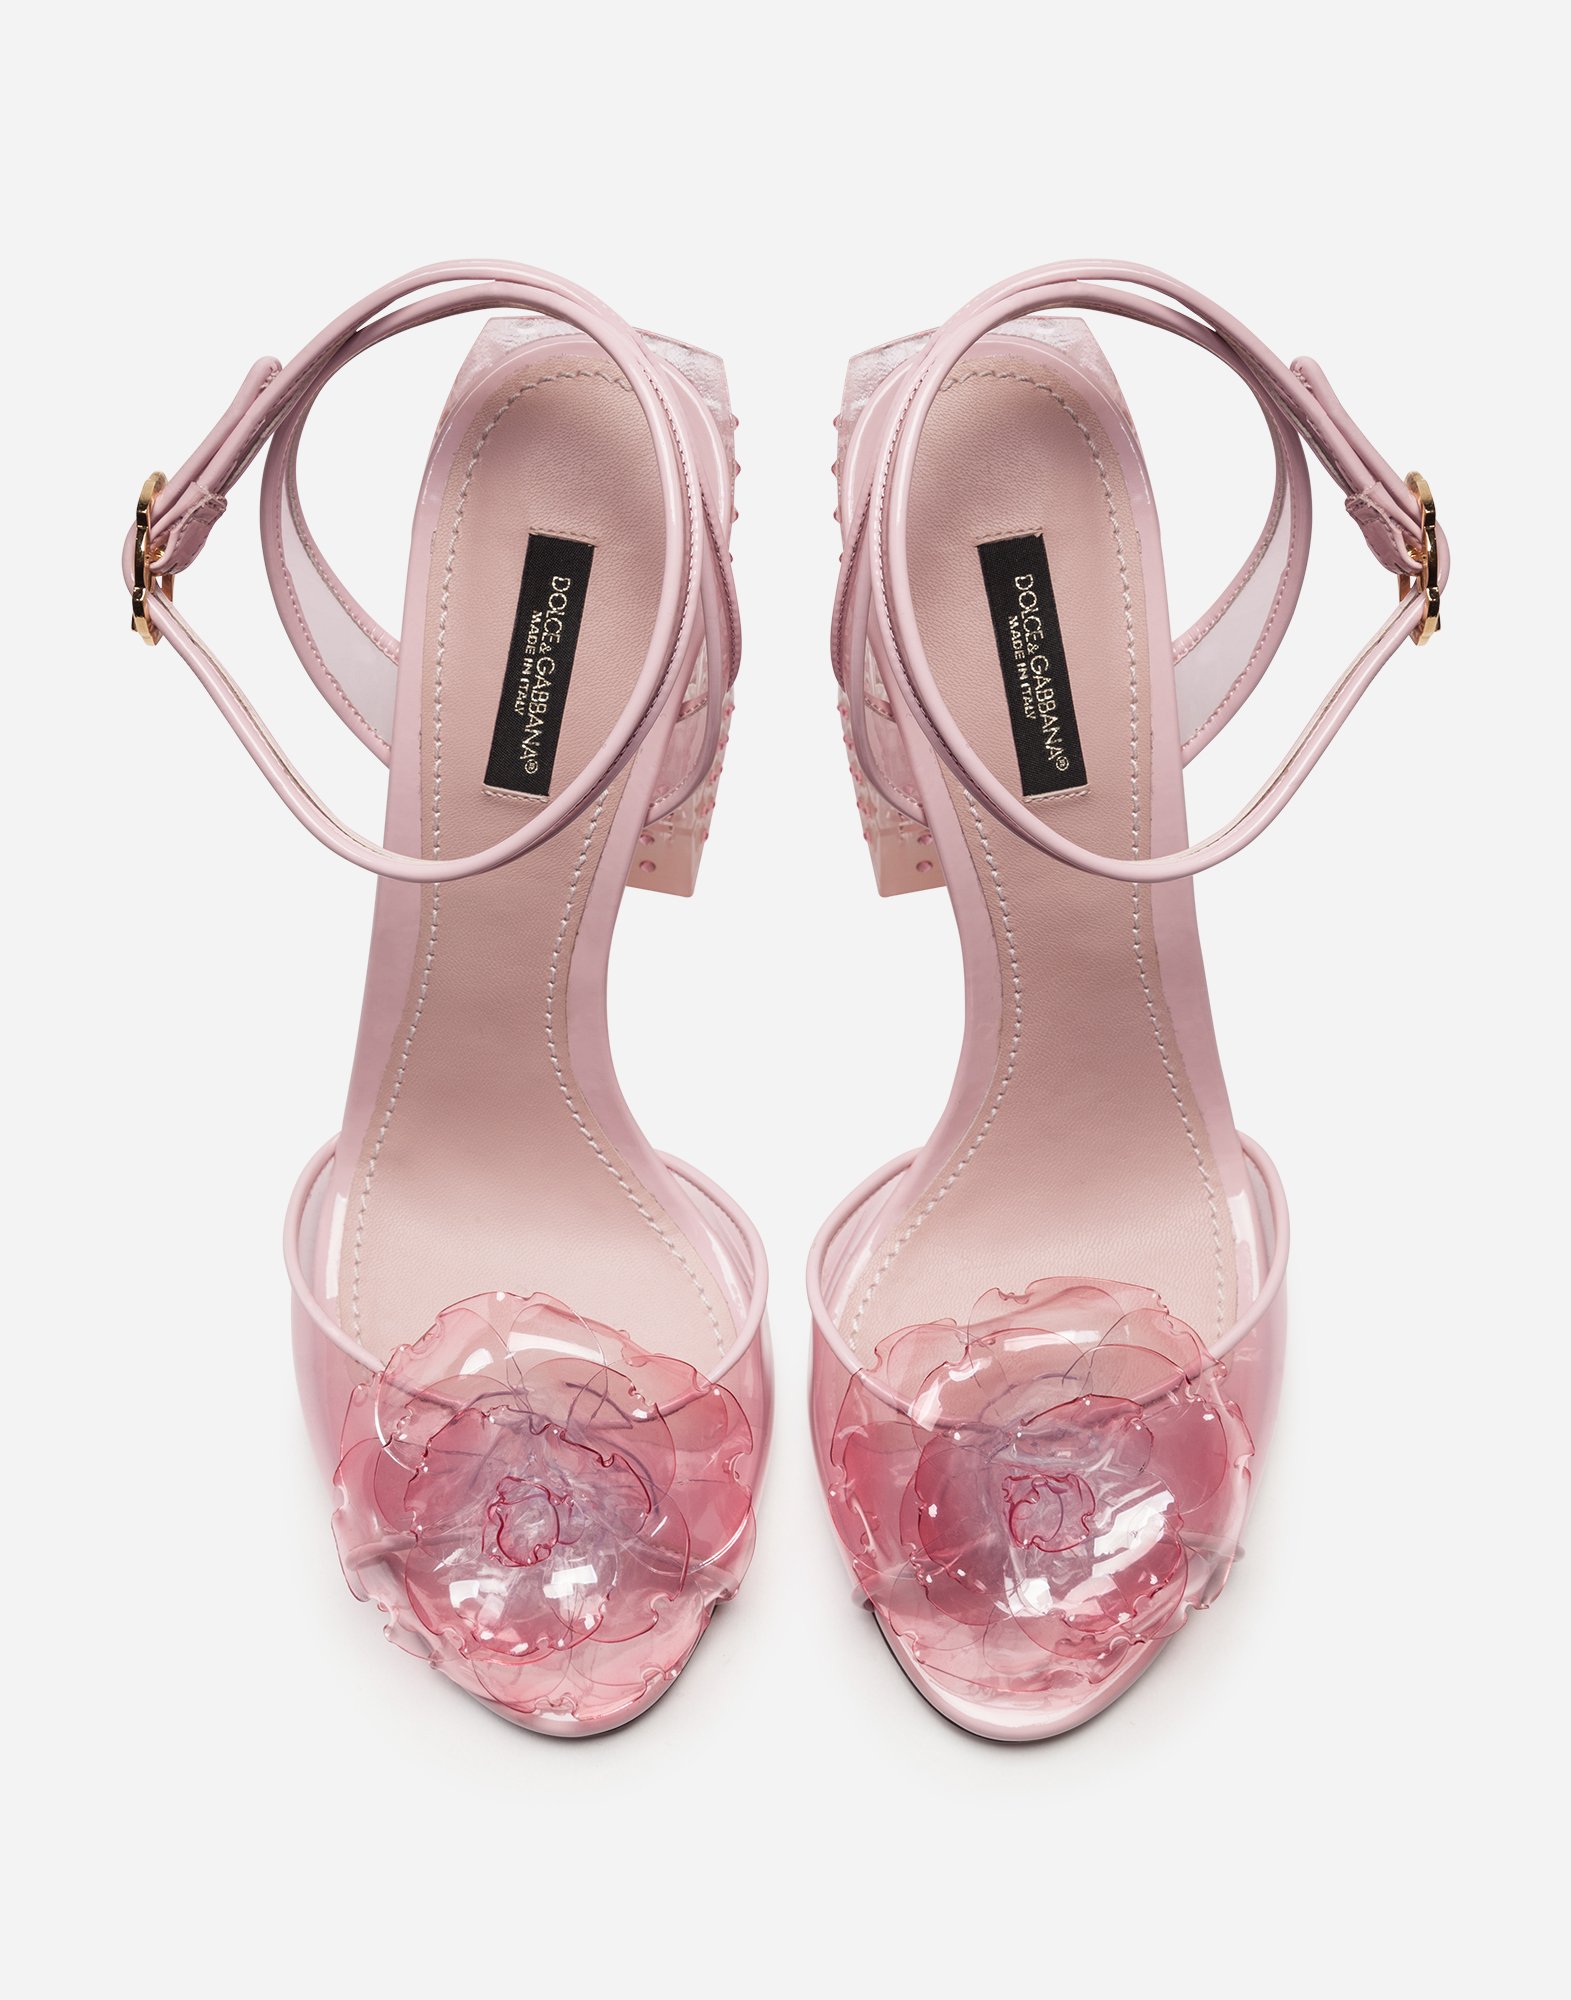 Cinderella sandals with sint glass heel